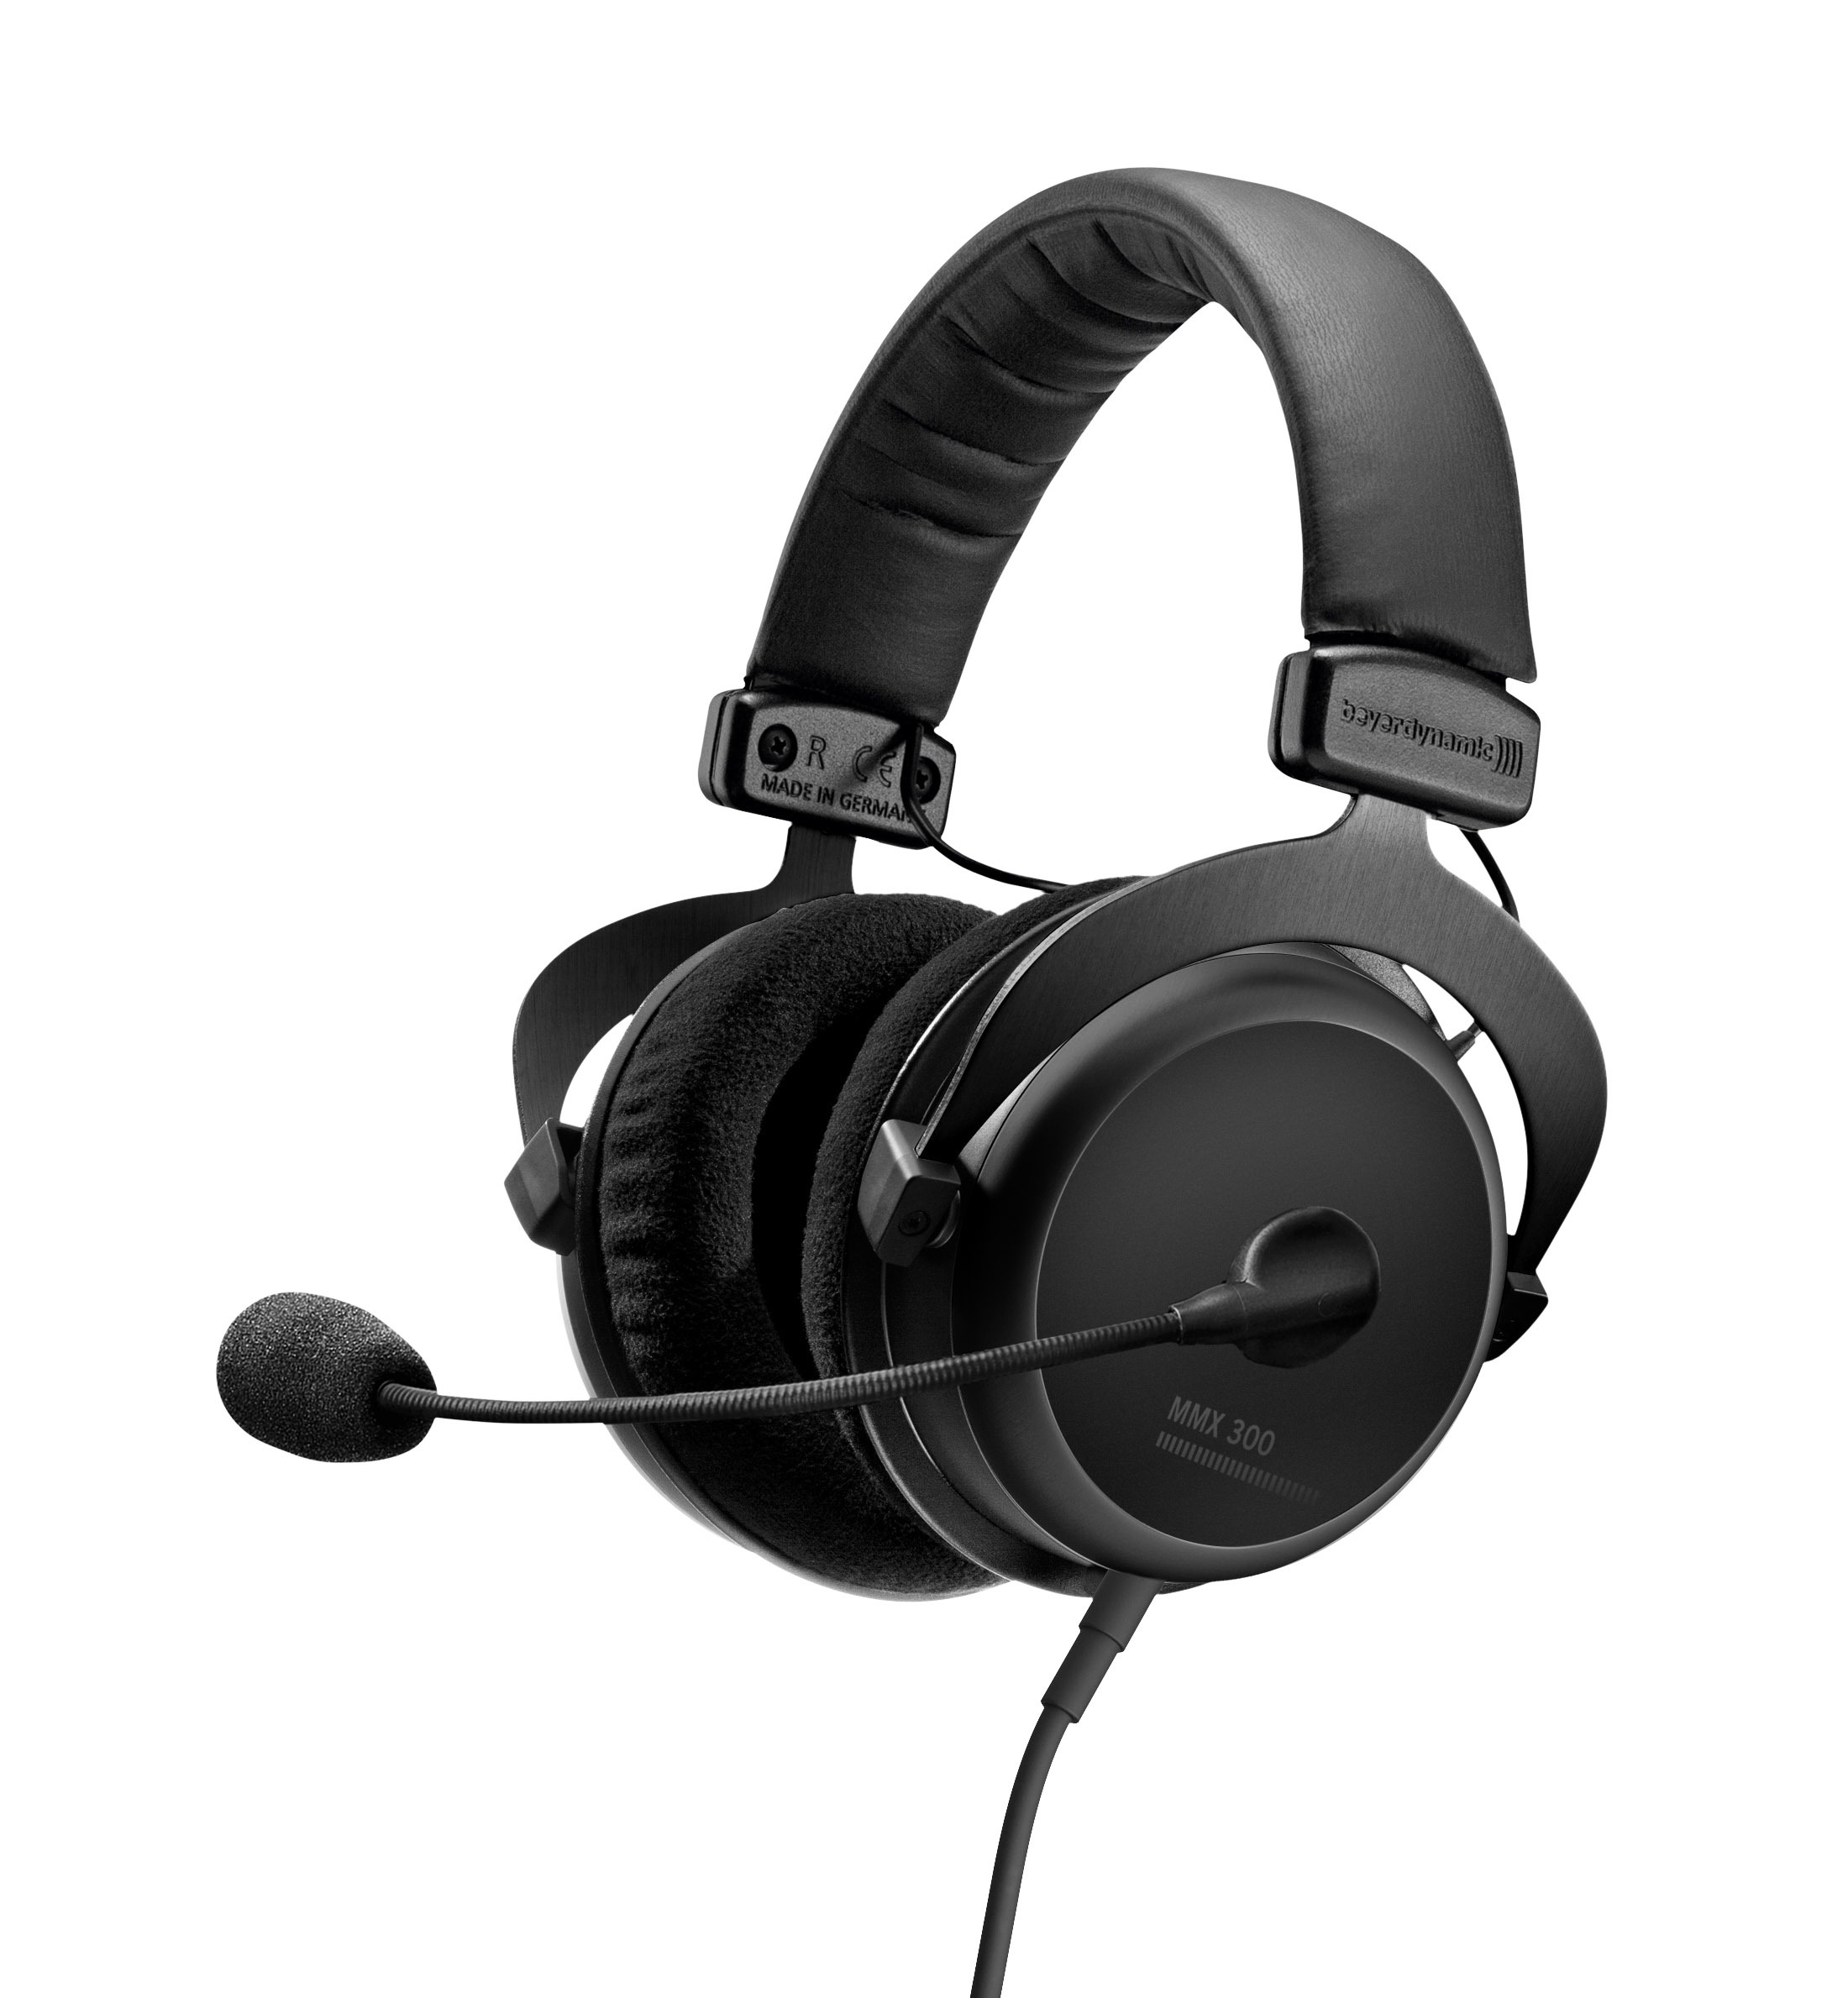 Beyerdynamic MMX300 Mac/PC Gaming Premium Digital Headset with Microphone 1137728 Accessories Digital DJ Gear